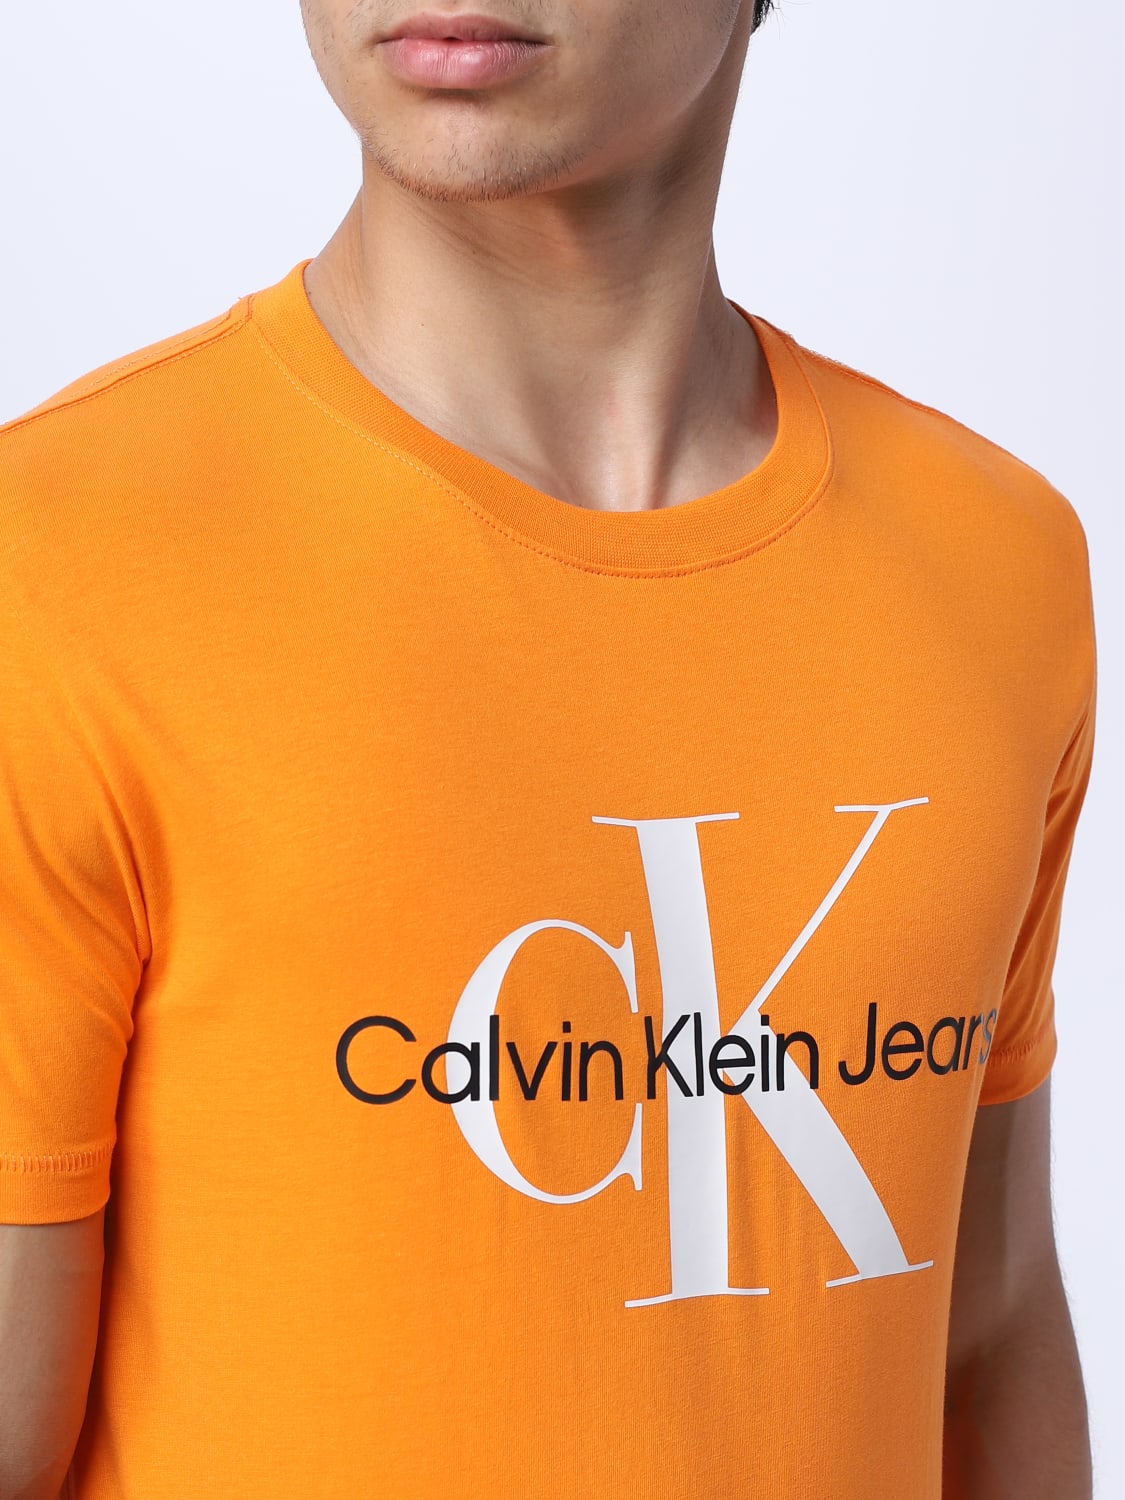 CALVIN KLEIN JEANS: t-shirt for man - Orange  Calvin Klein Jeans t-shirt  J30J320806 online at